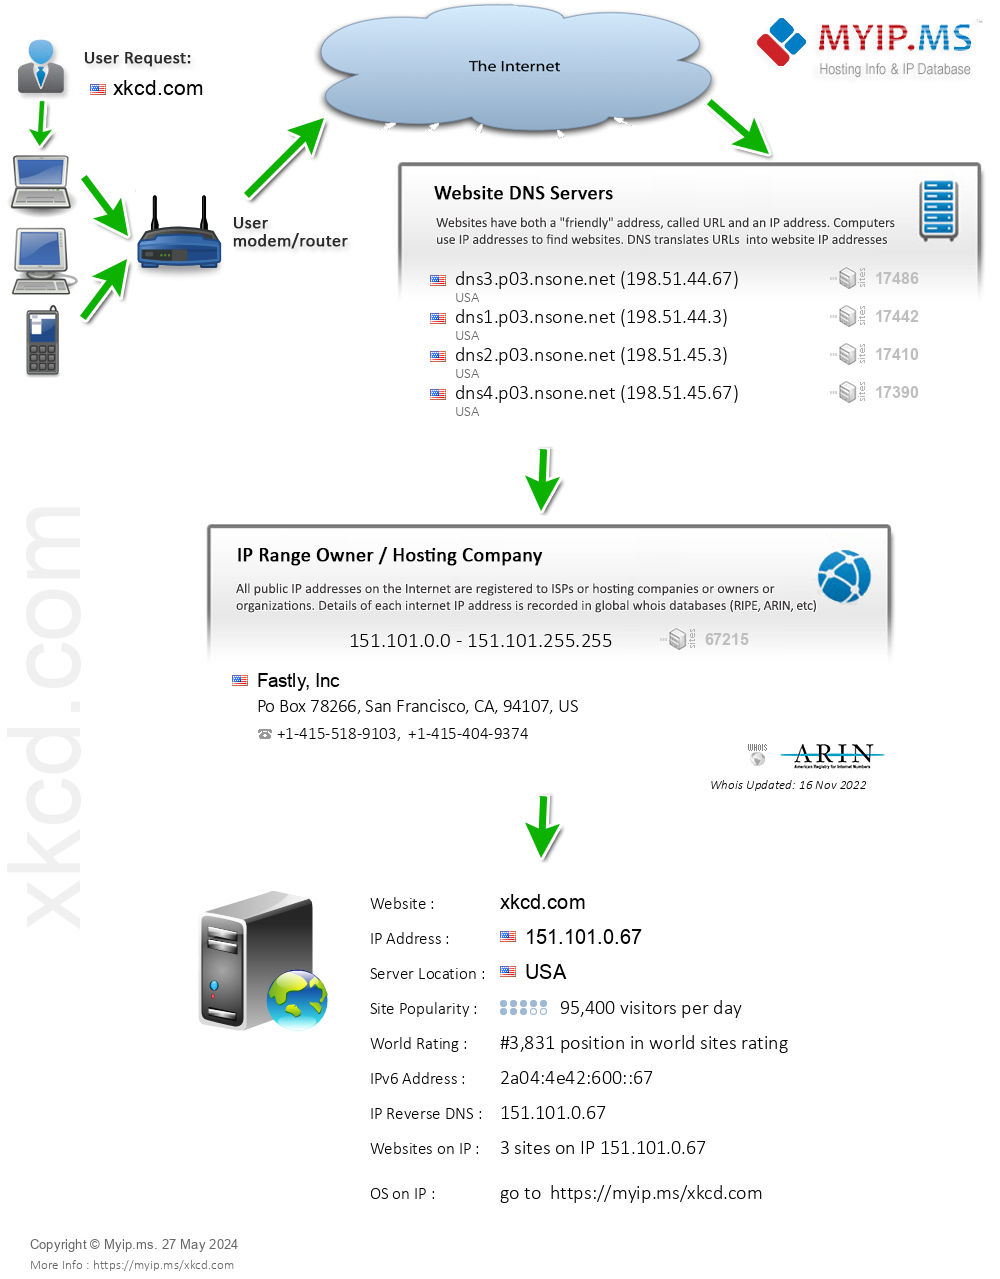 Xkcd.com - Website Hosting Visual IP Diagram